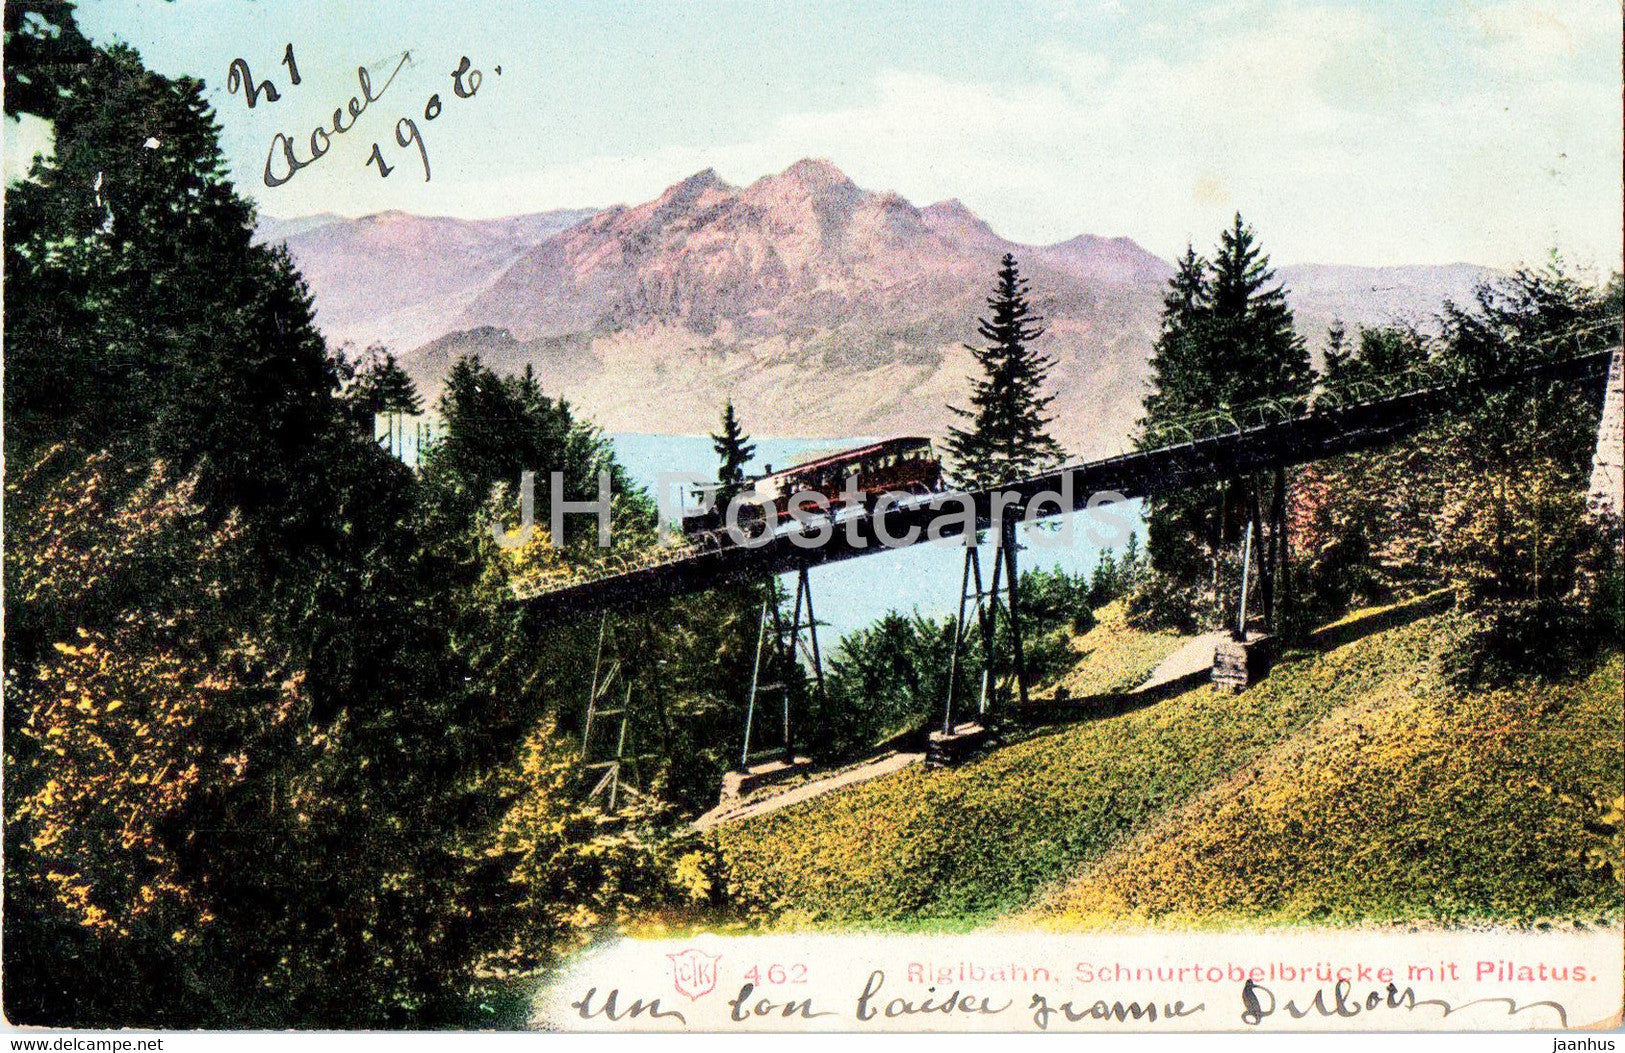 Rigibahn - Schnurtobelbrucke mit Pilatus - funicular - 462 - old postcard - 1906 - Switzerland - used - JH Postcards